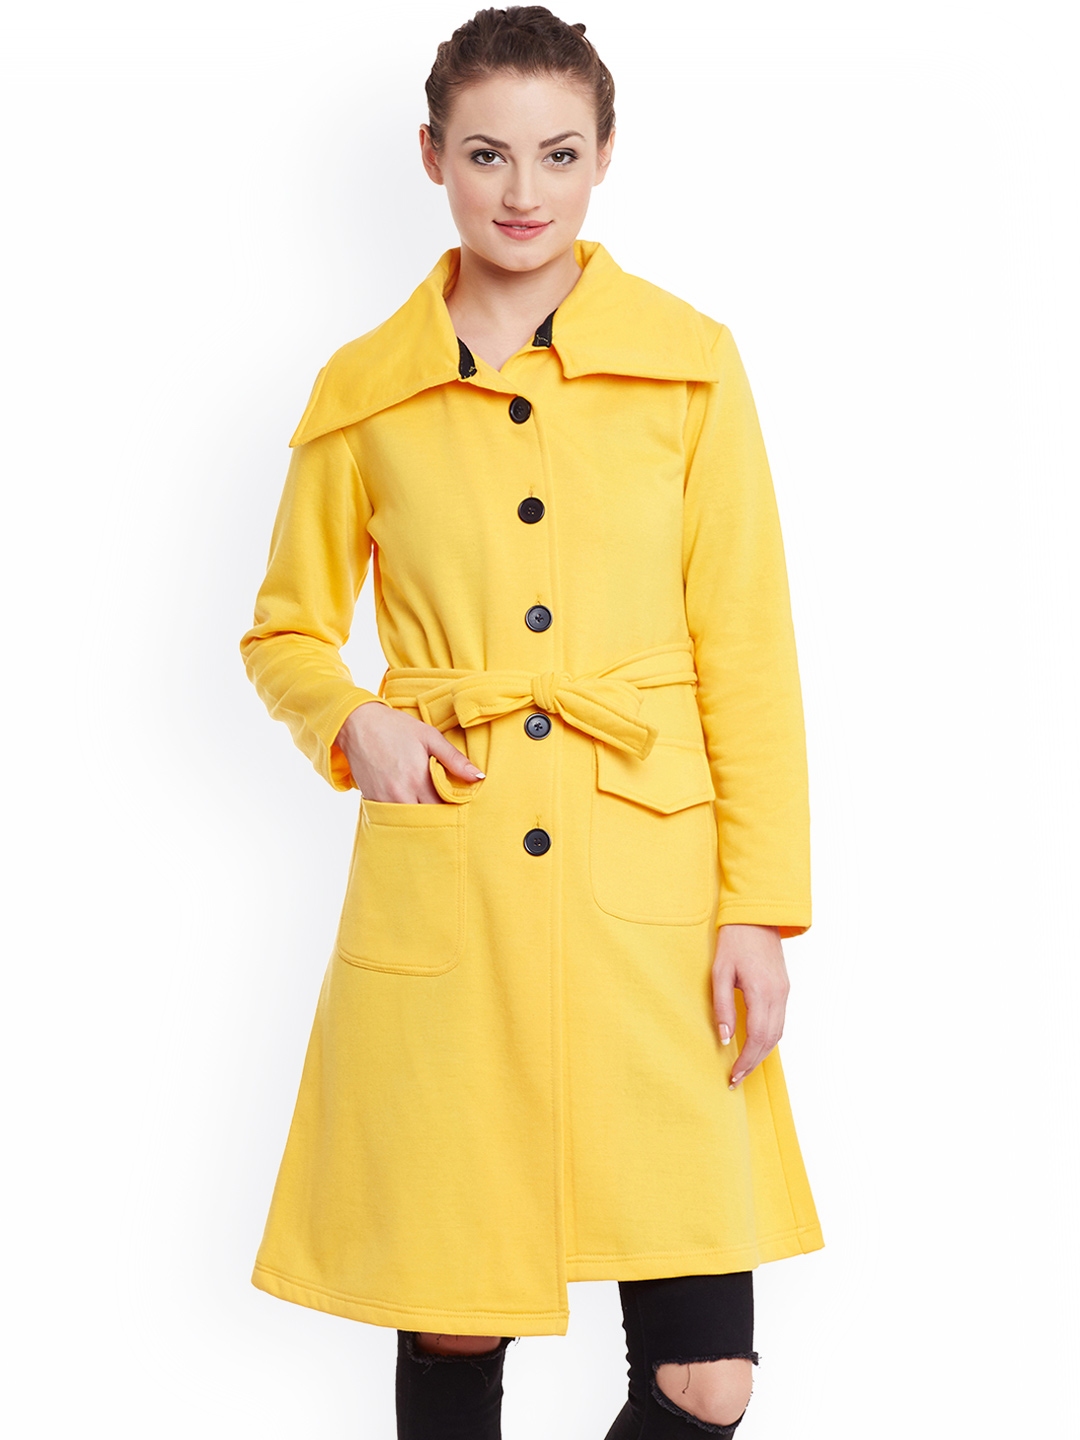 Buy Belle Fille Yellow Trench Coat - Coats for Women 2091939 | Myntra